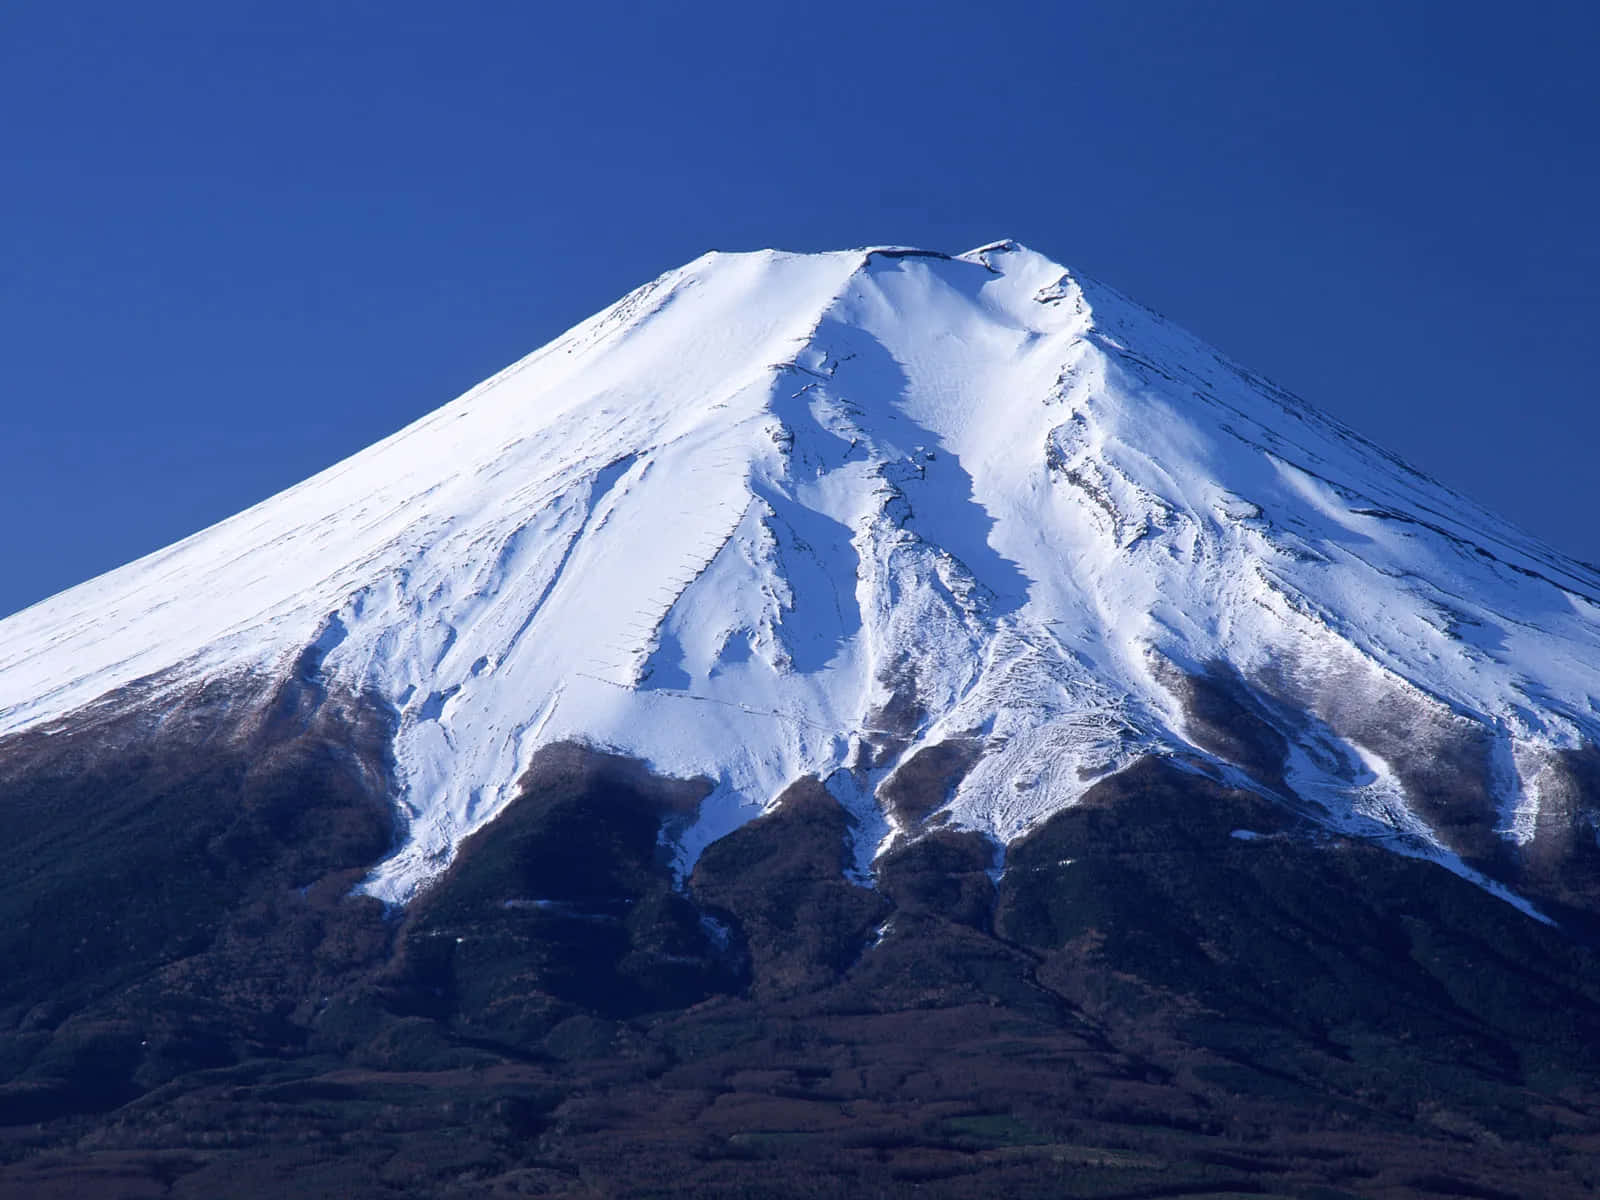 The Majestic Landscape of Mt. Fuji